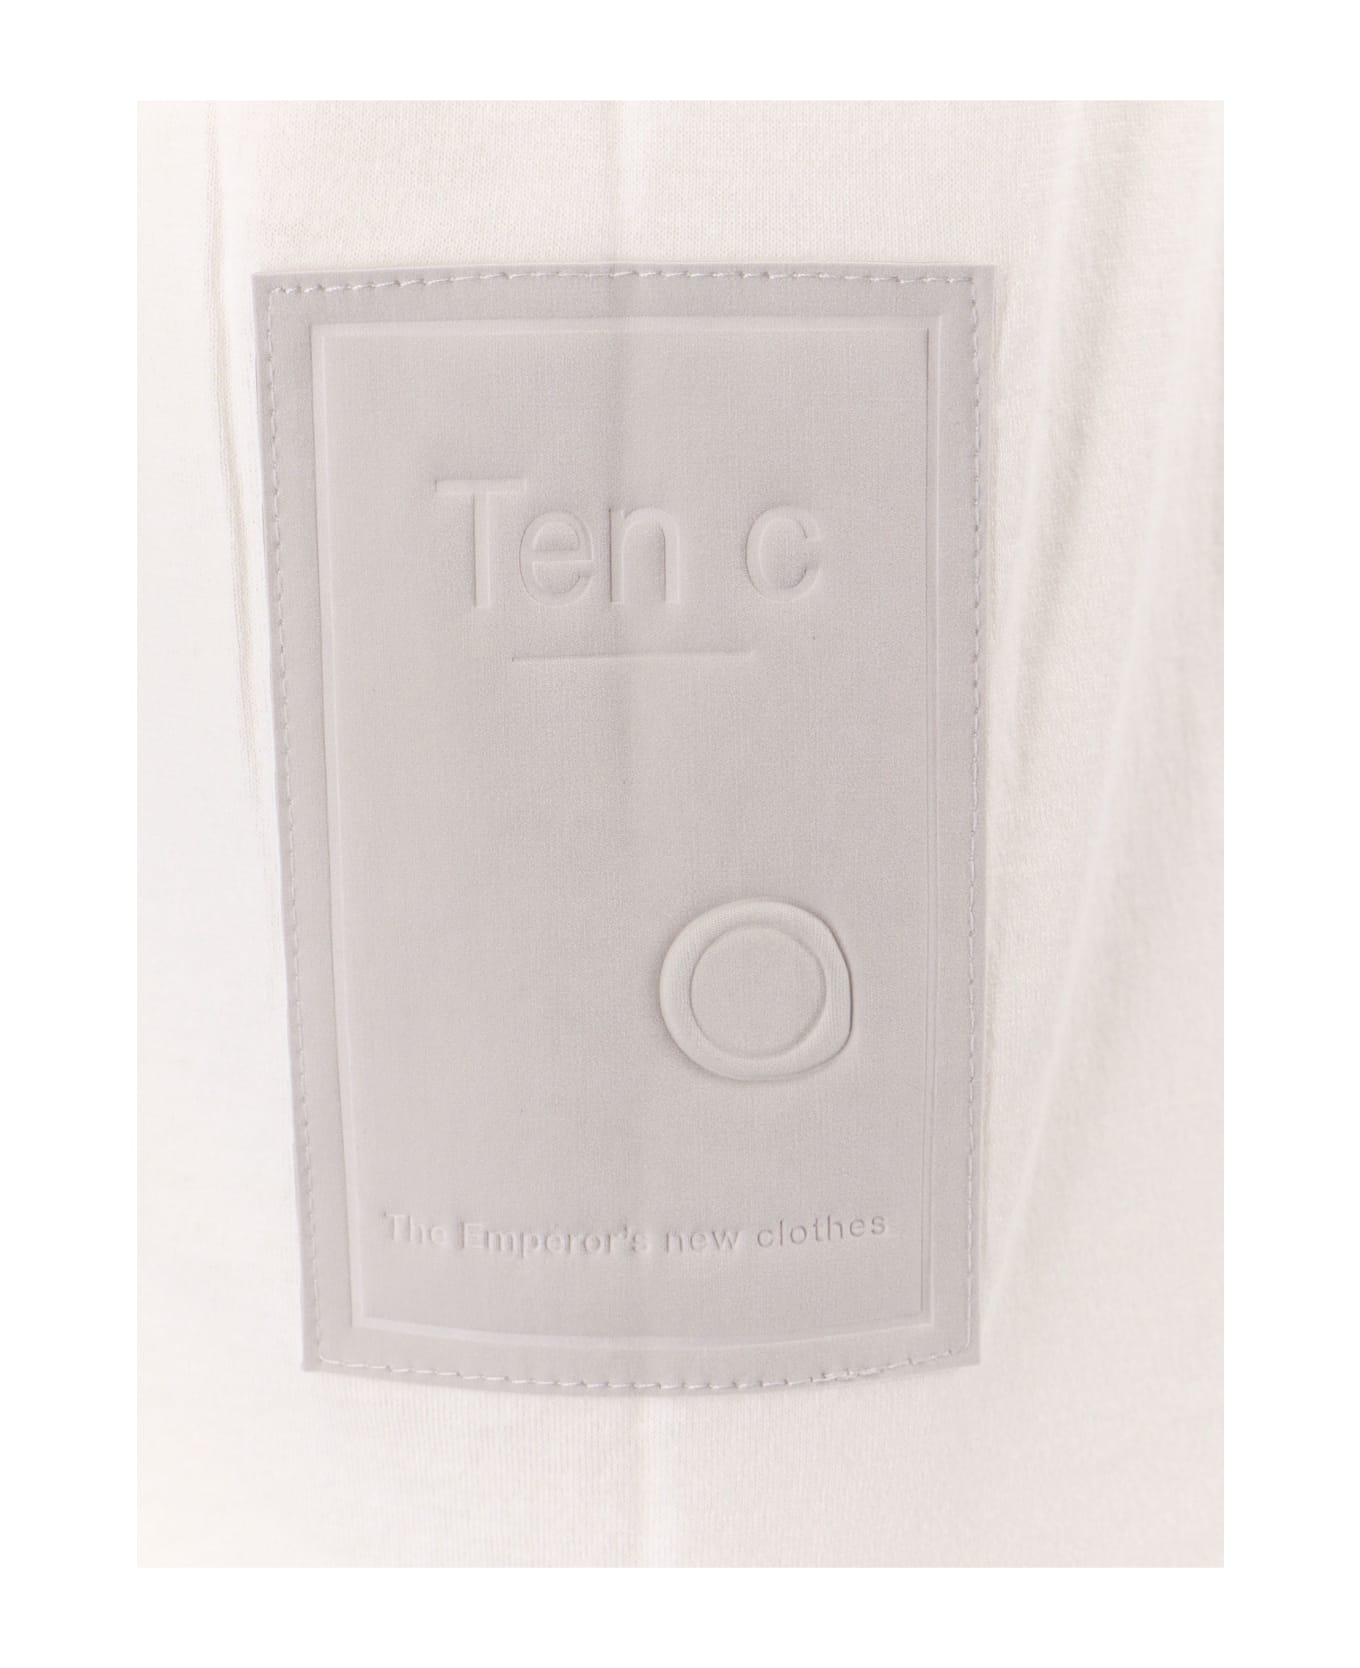 Ten C T-shirt - WHITE